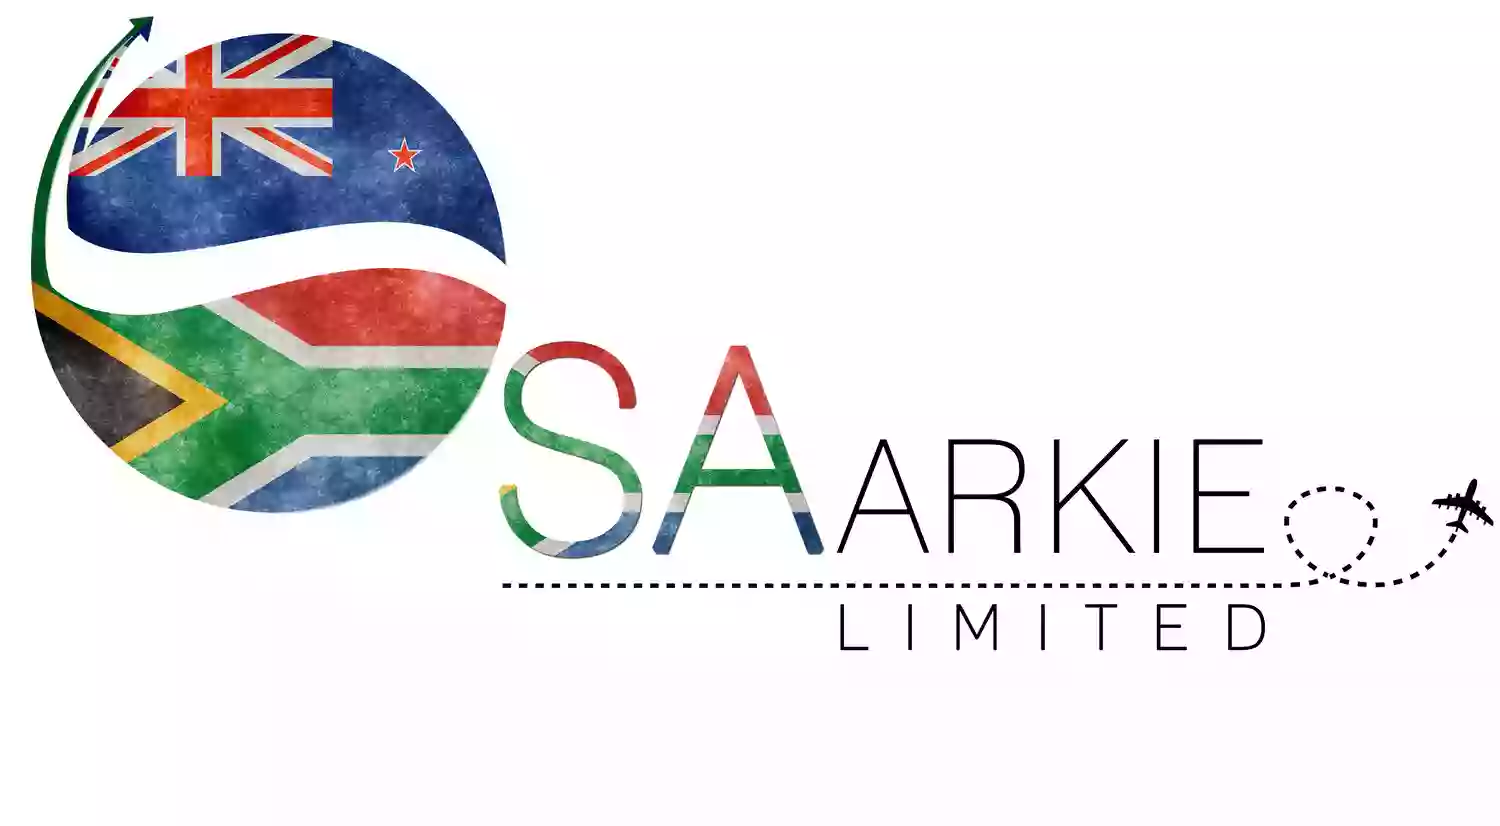 Saarkie Limited